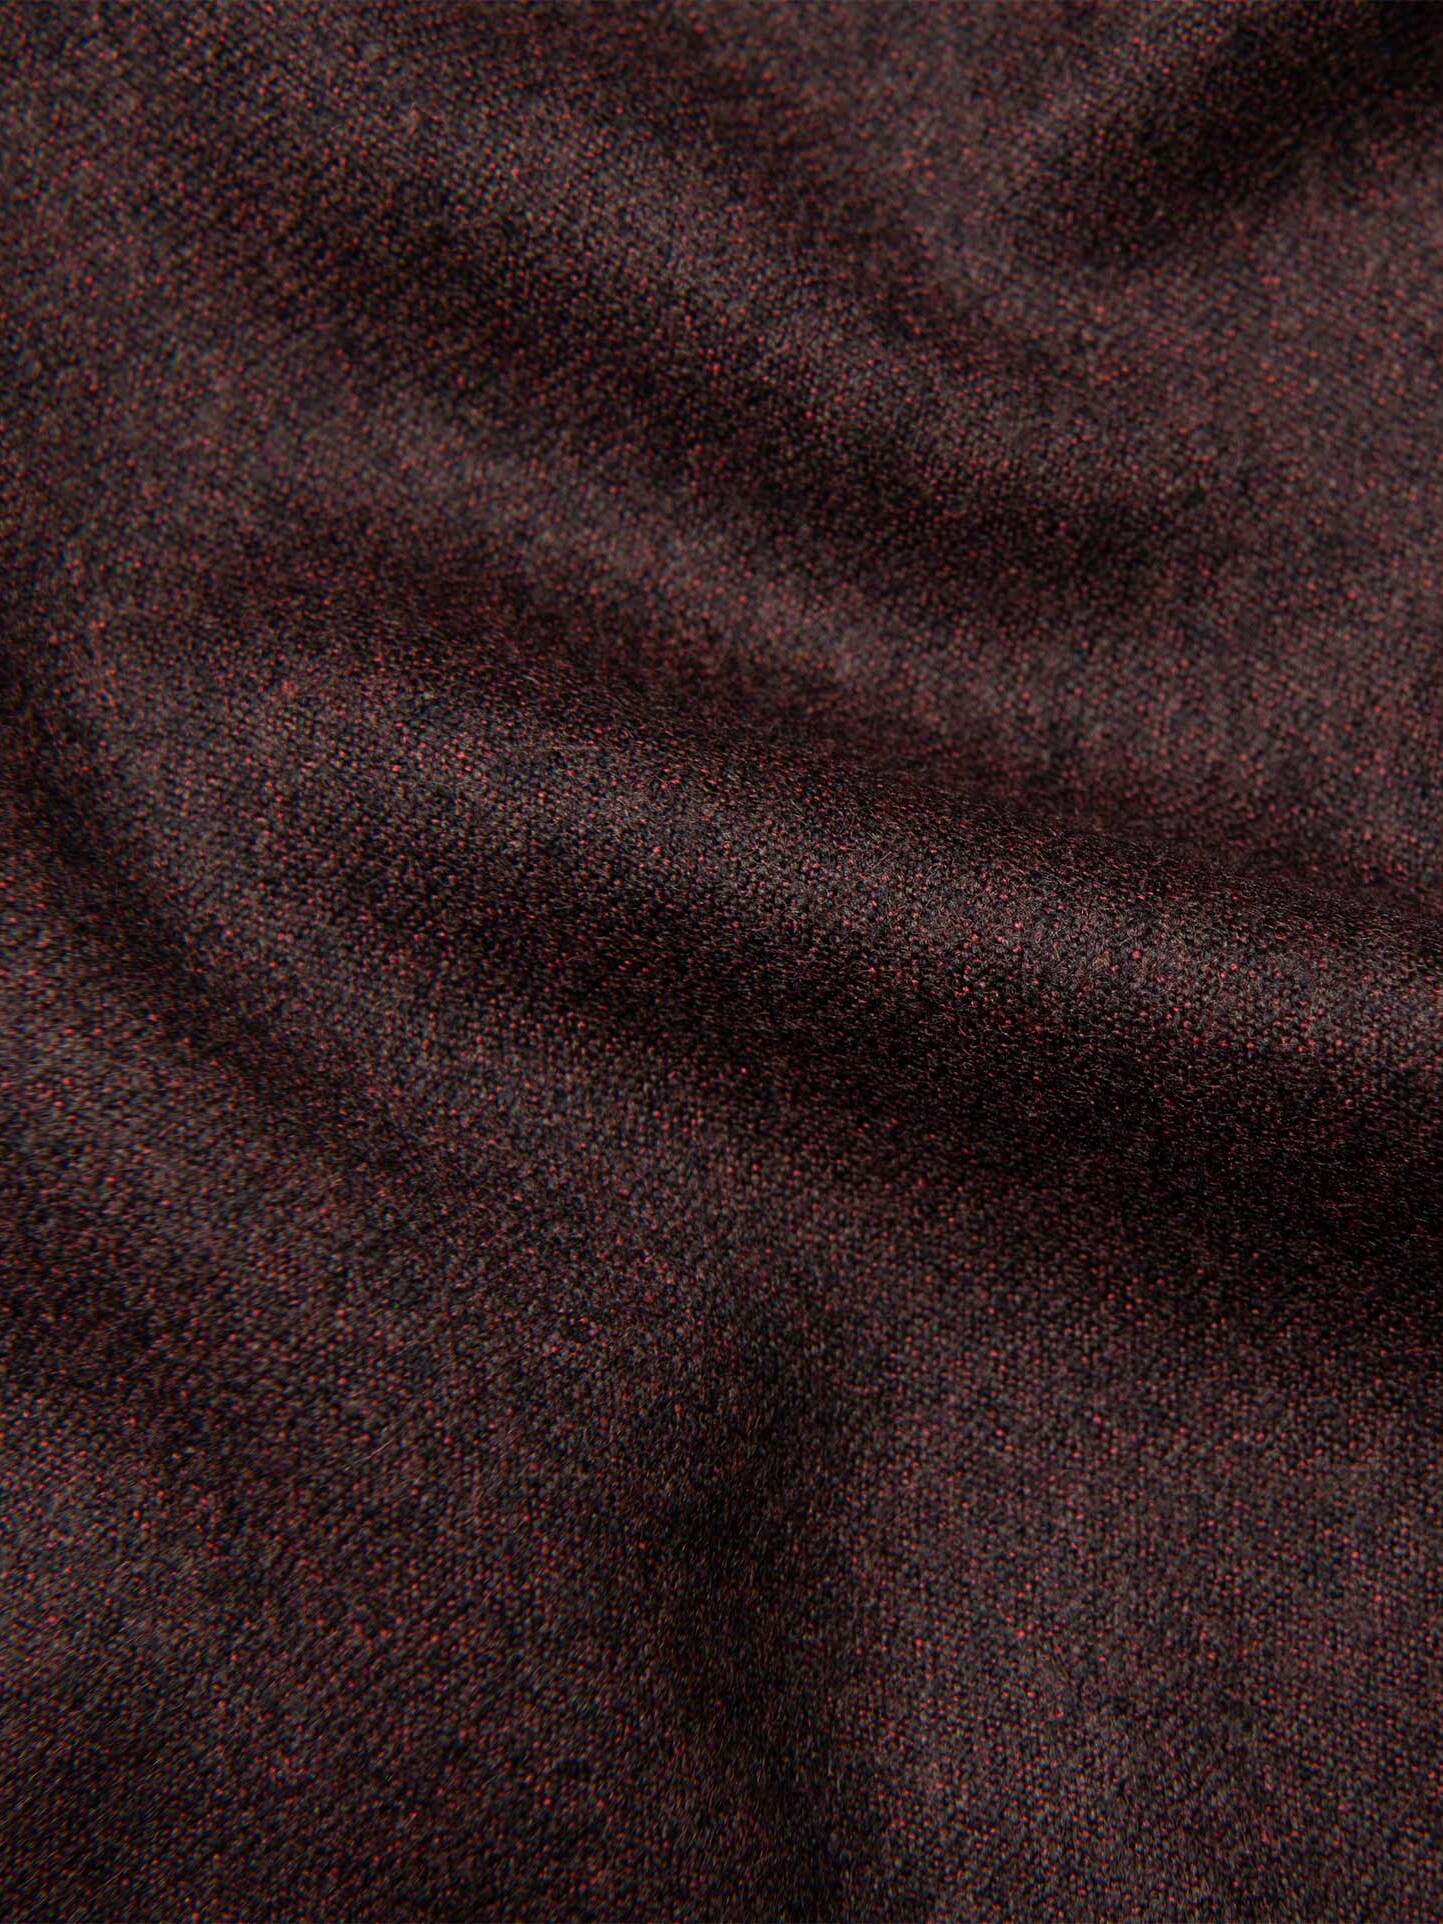 Reda Burgundy Melange Merino Wool Flannel Shirts by Proper Cloth